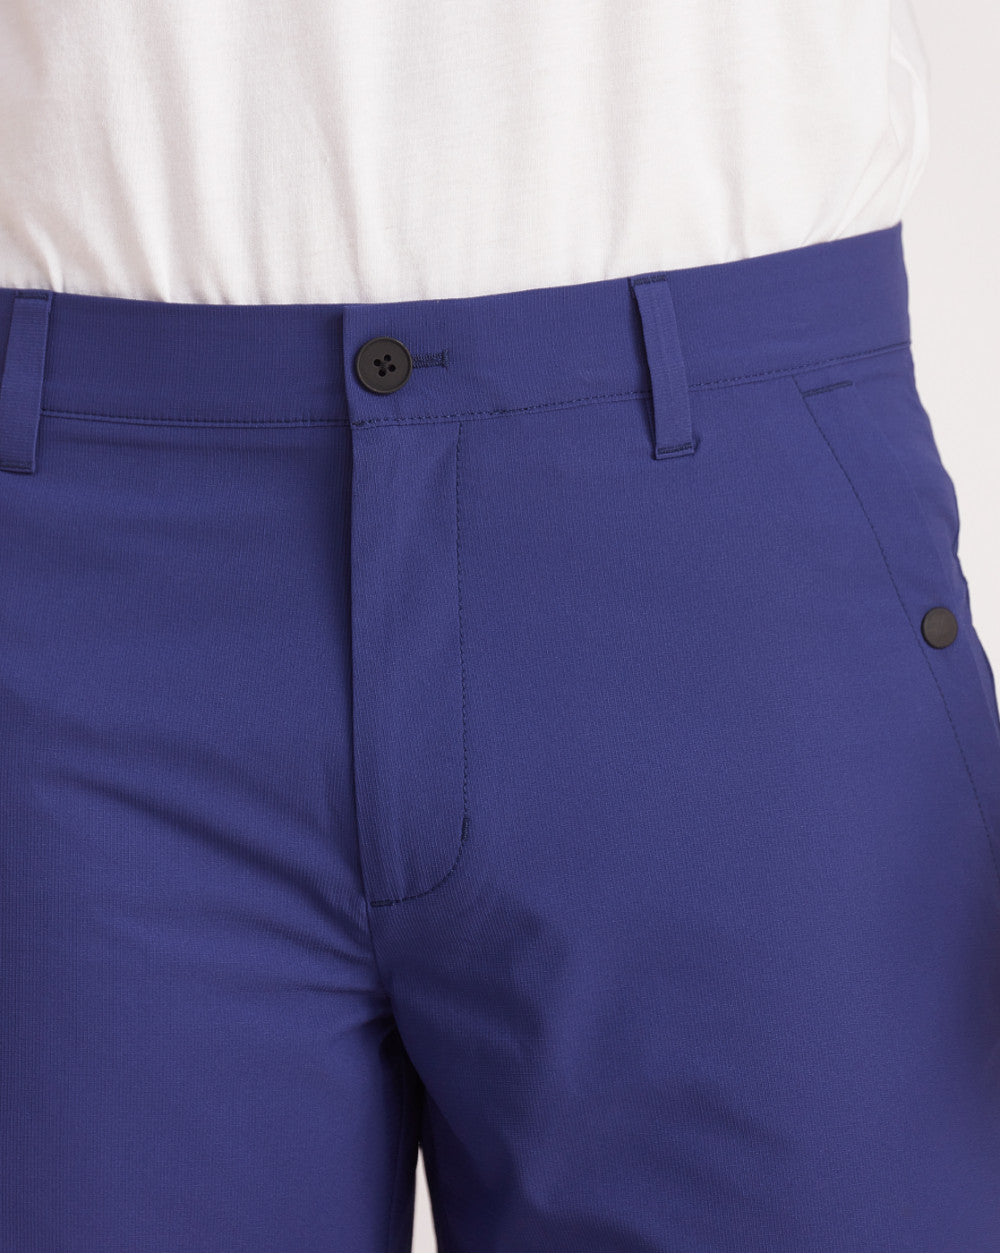 Regular Fit Ripstop Textured Shorts - Ink Blue